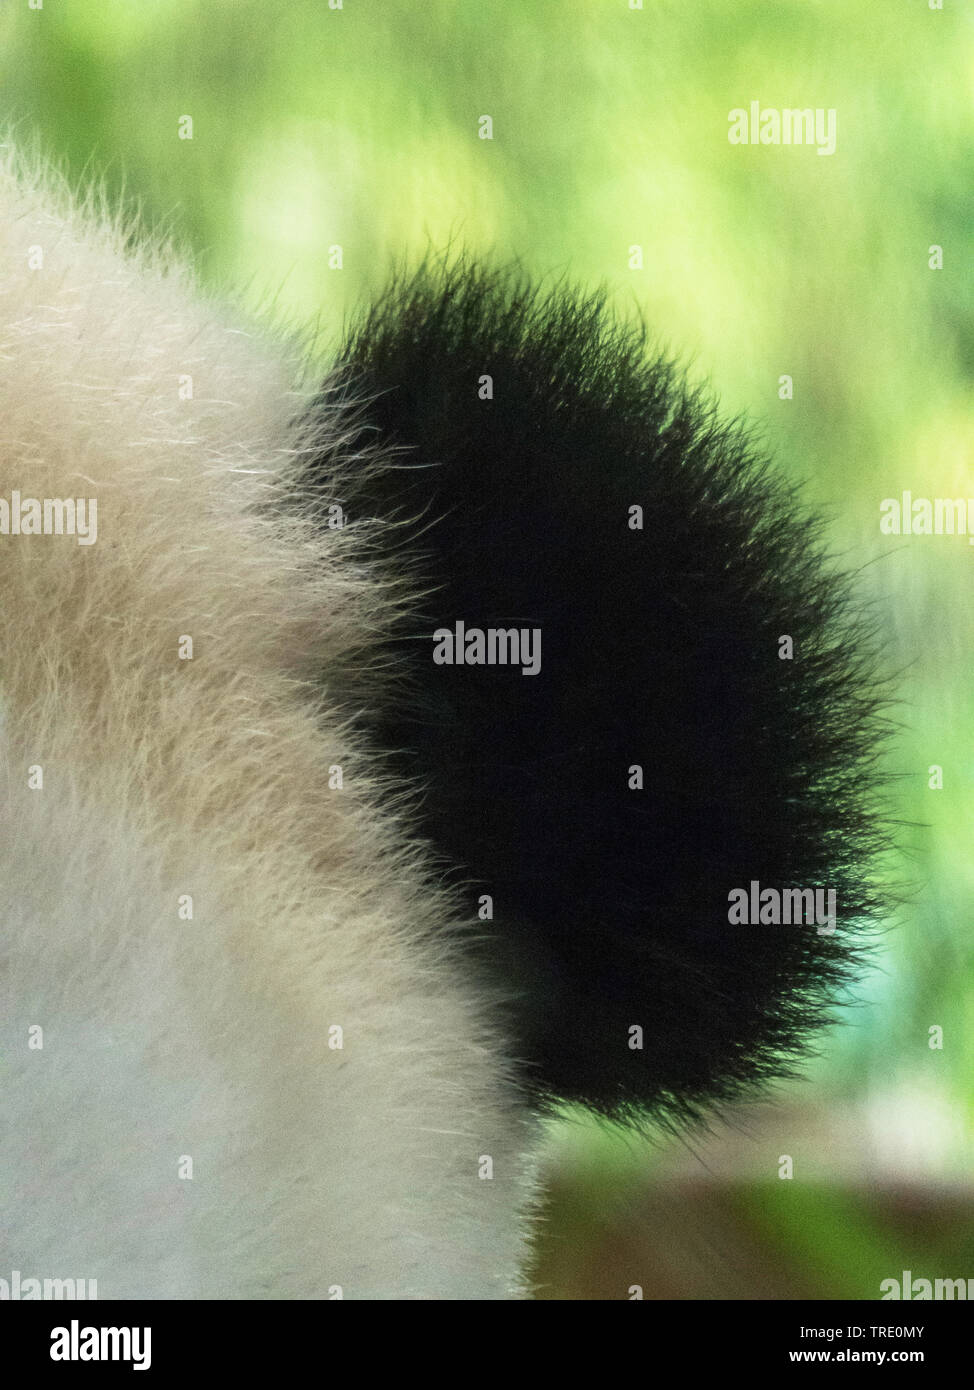 giant panda (Ailuropoda melanoleuca), ear of a giant panda Stock Photo